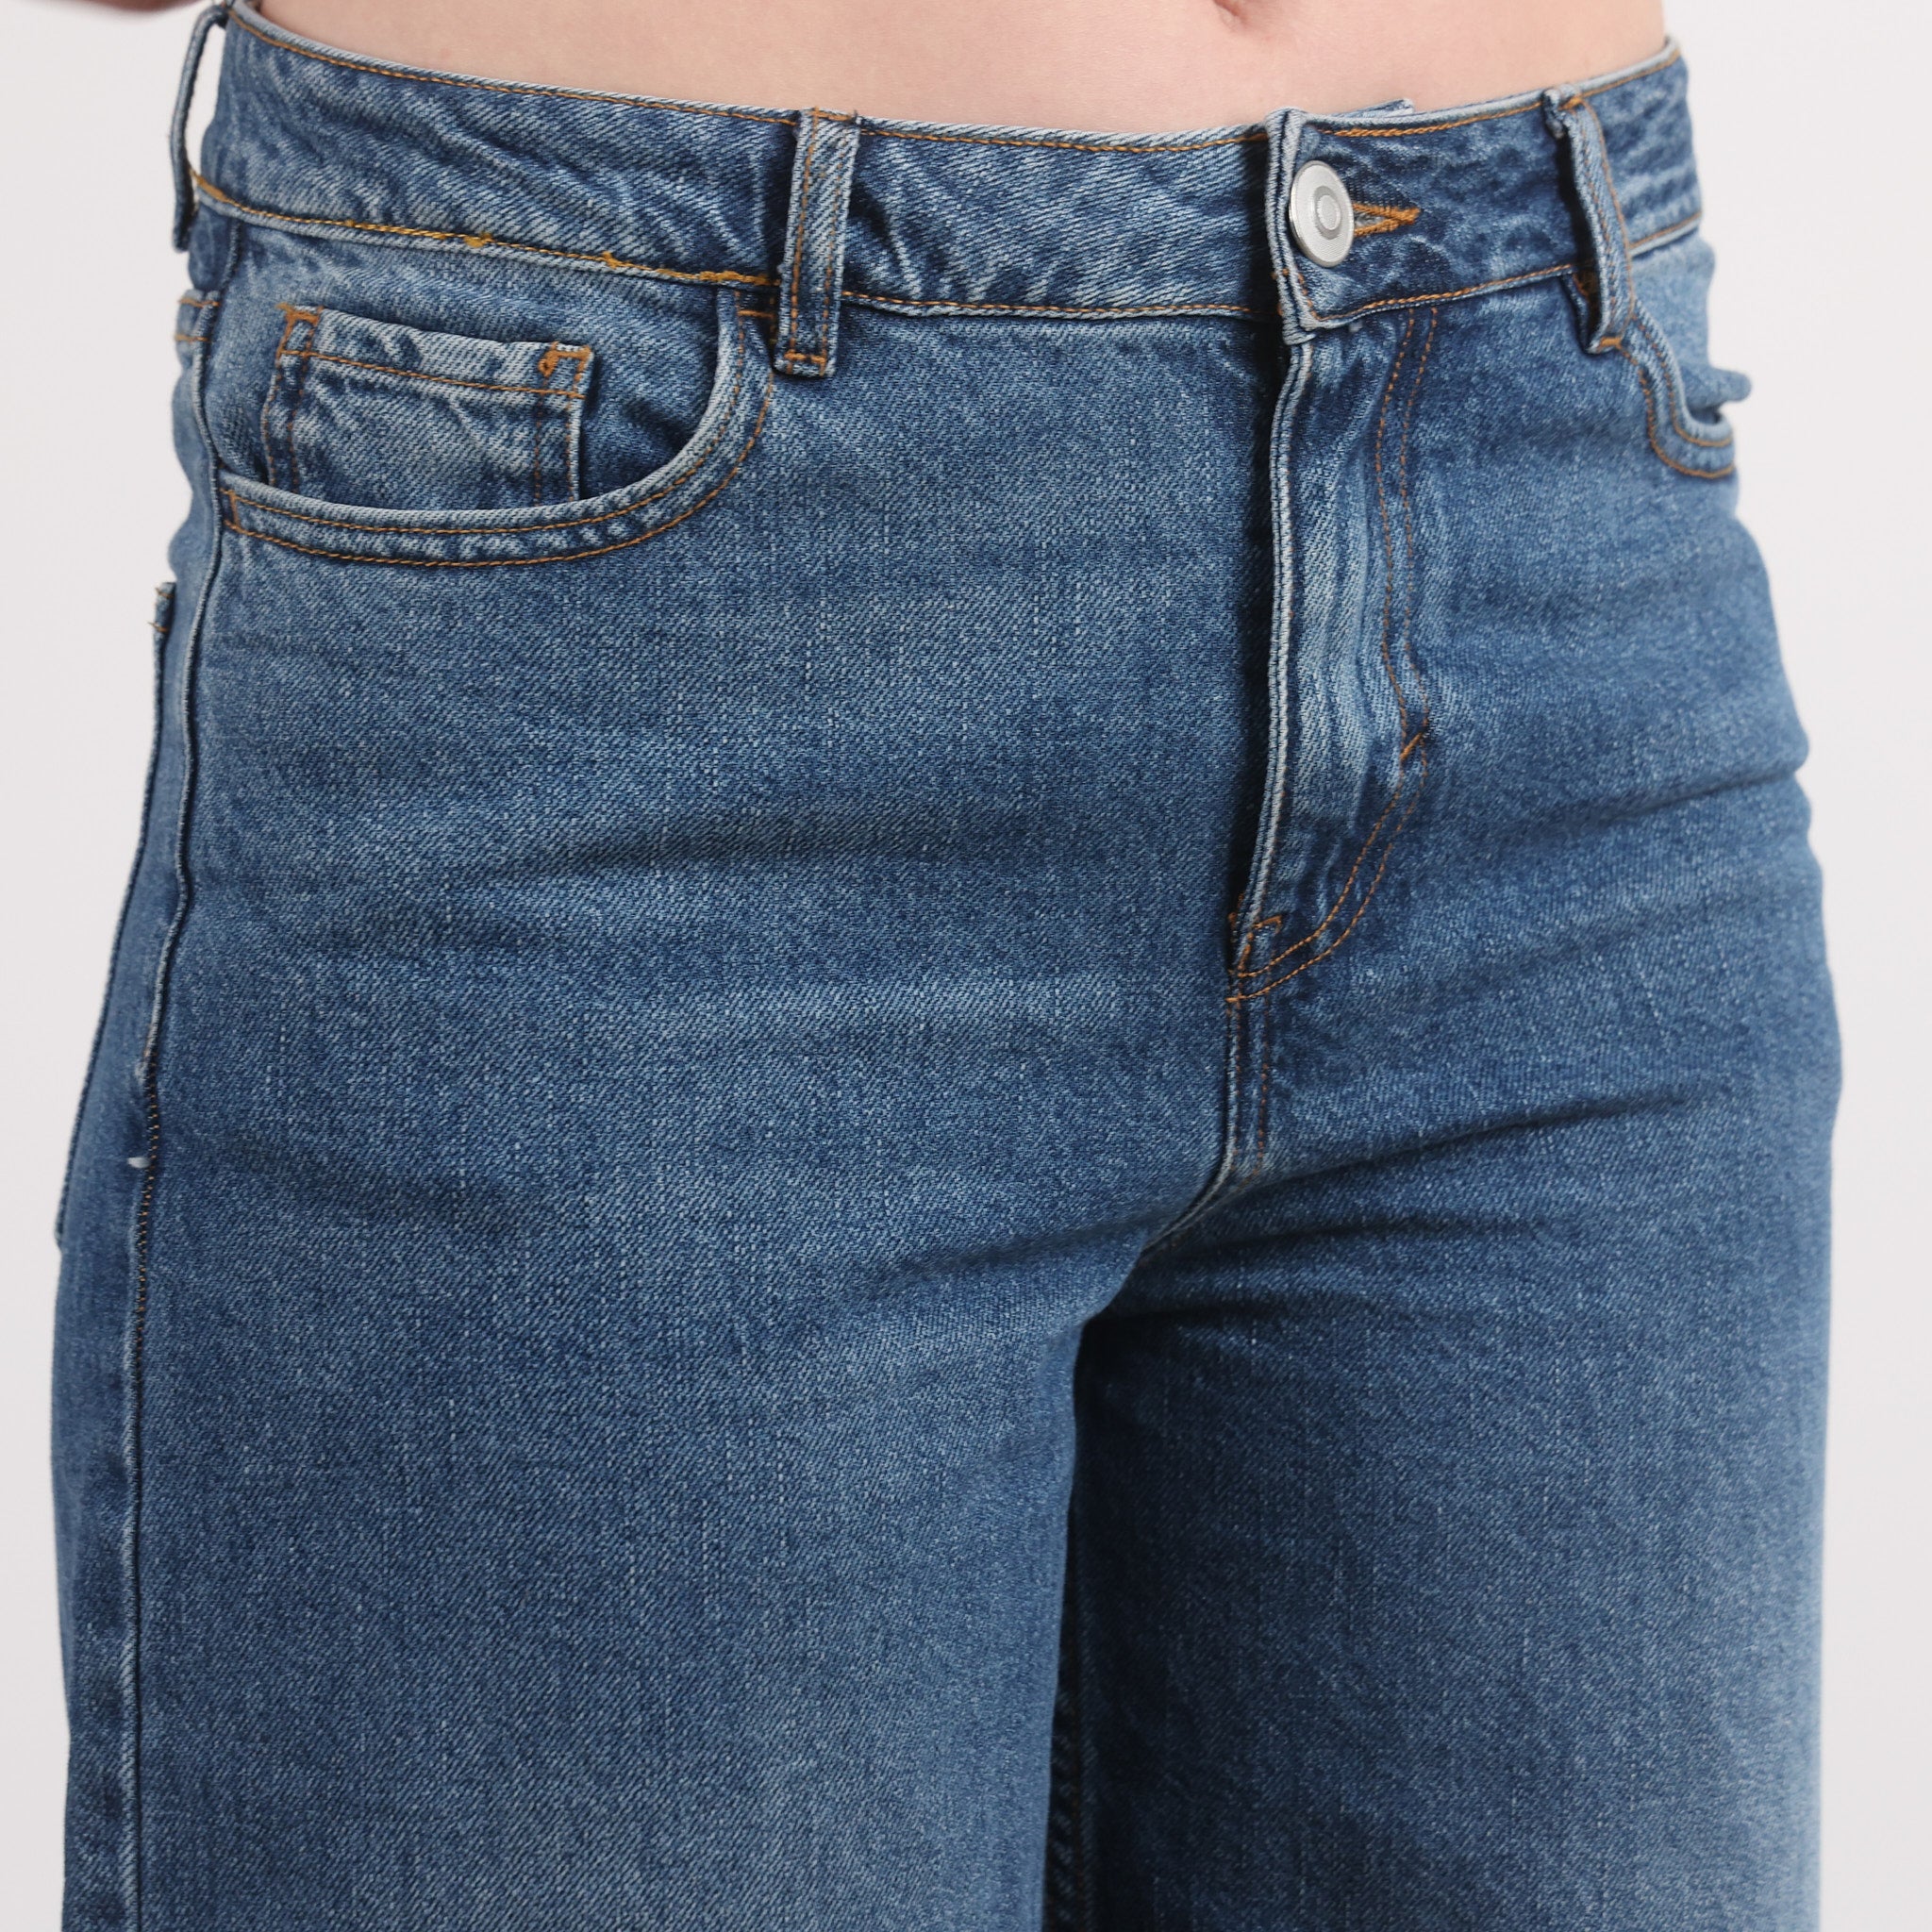 Jeans, UK Size 8